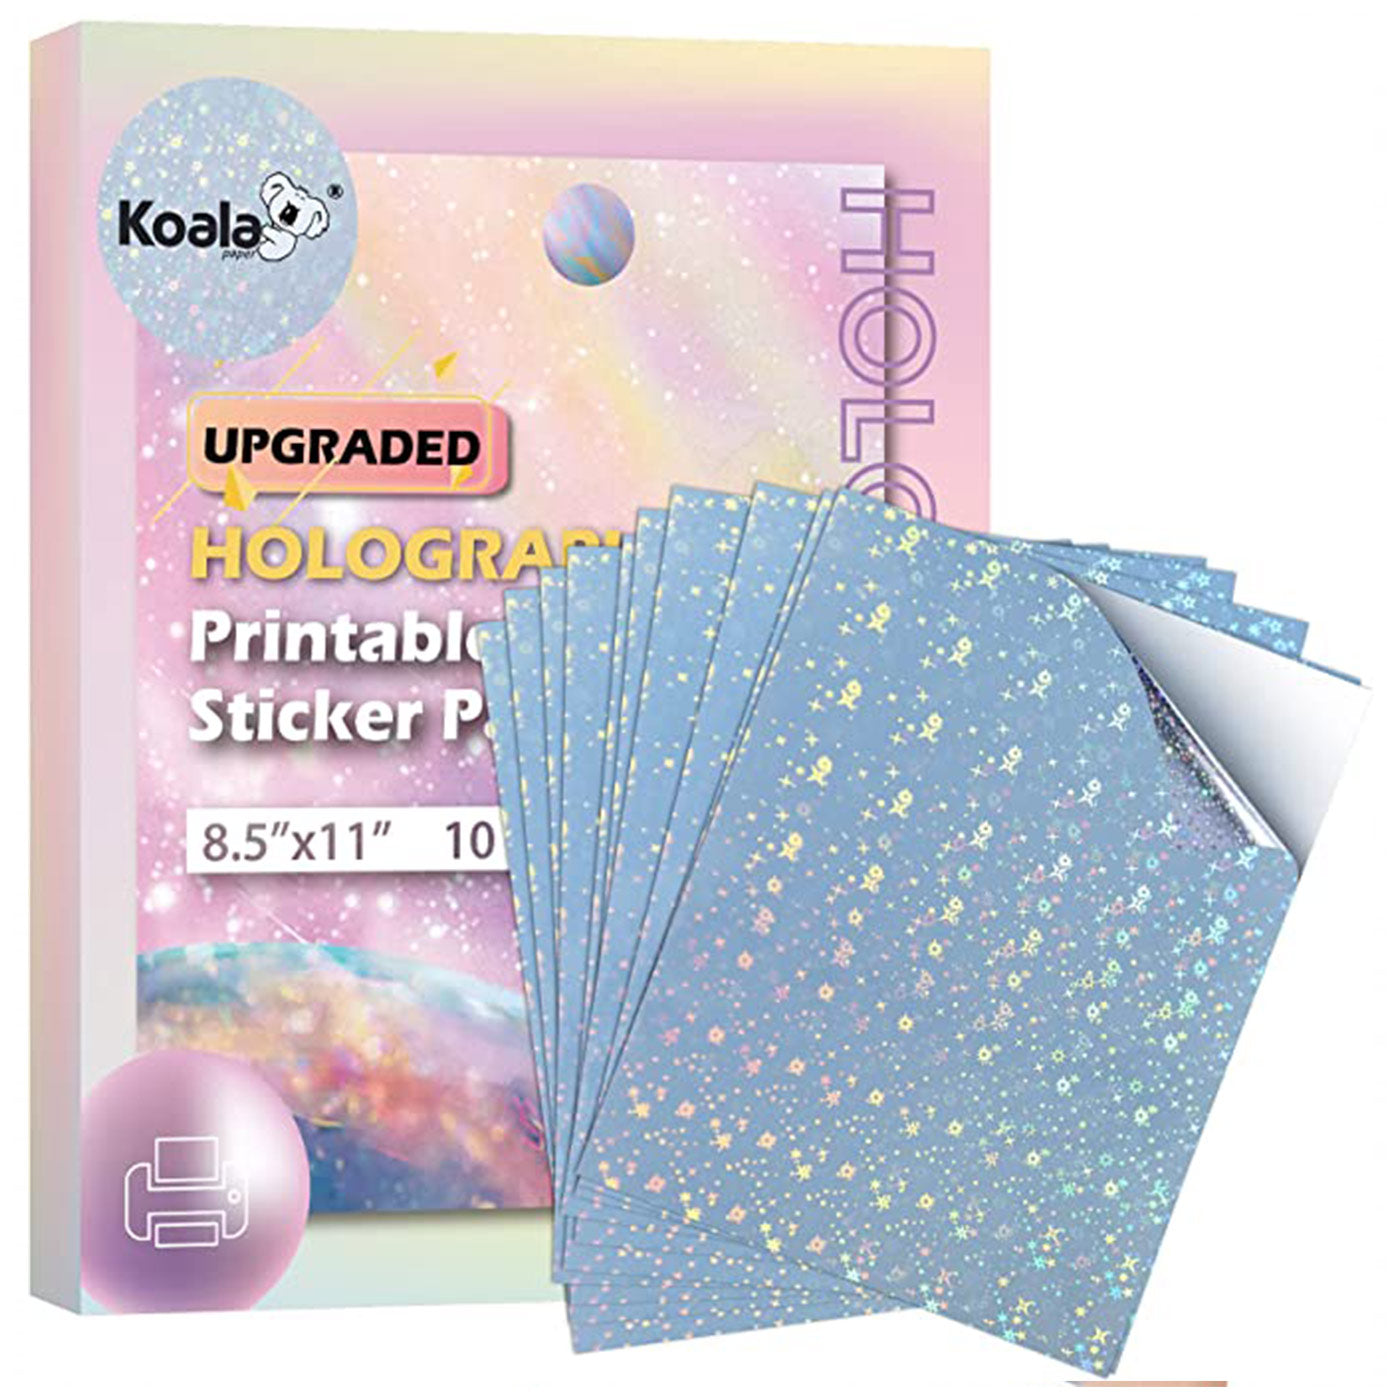 Koala Printable Glossy Photo Sticker Paper for Inkjet Printers, 8.5x11 –  koalagp